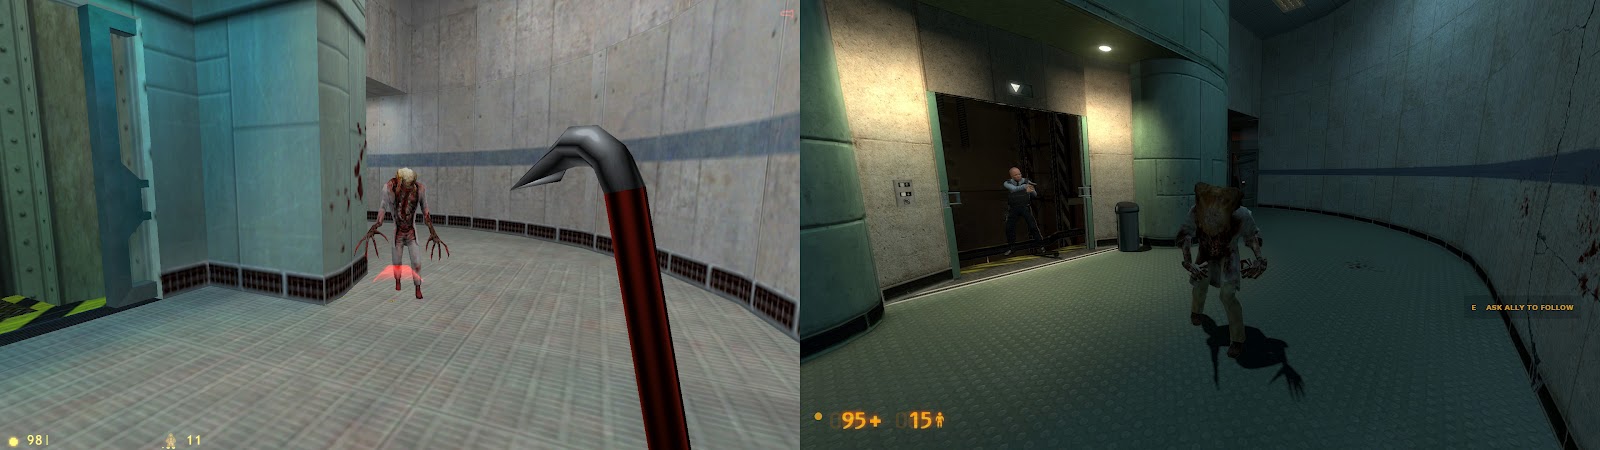 Half life оригинал. Ремастер half Life Black Mesa. Half Life 1 vs Black Mesa. Half Life 1 vs Black Mesa Xen. Монстры халф лайф Блэк Меса 2.